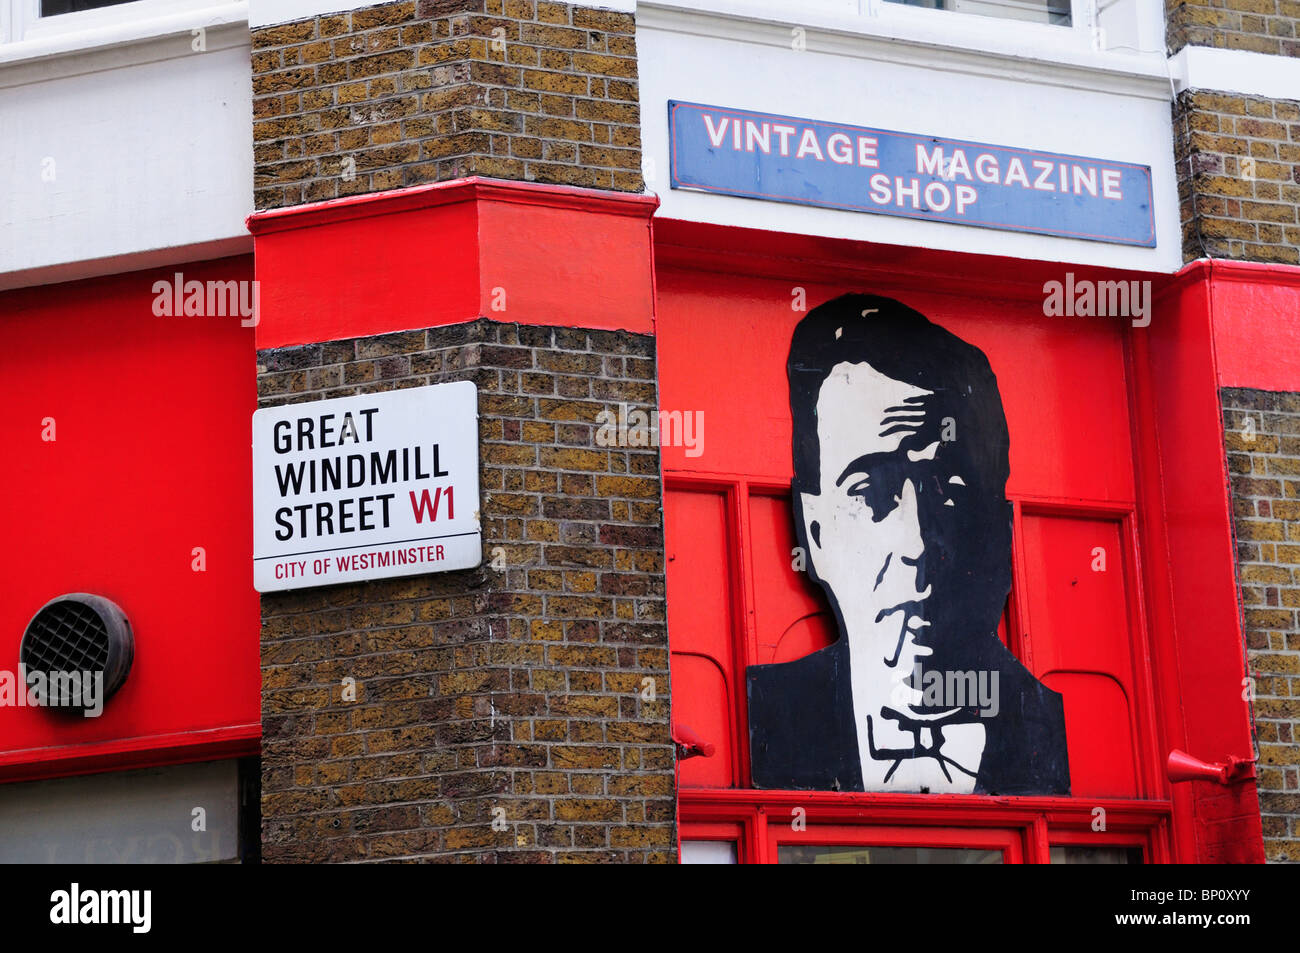 Vintage Magazine shop, Grande Mulino a Vento Street, Soho, London, England, Regno Unito Foto Stock